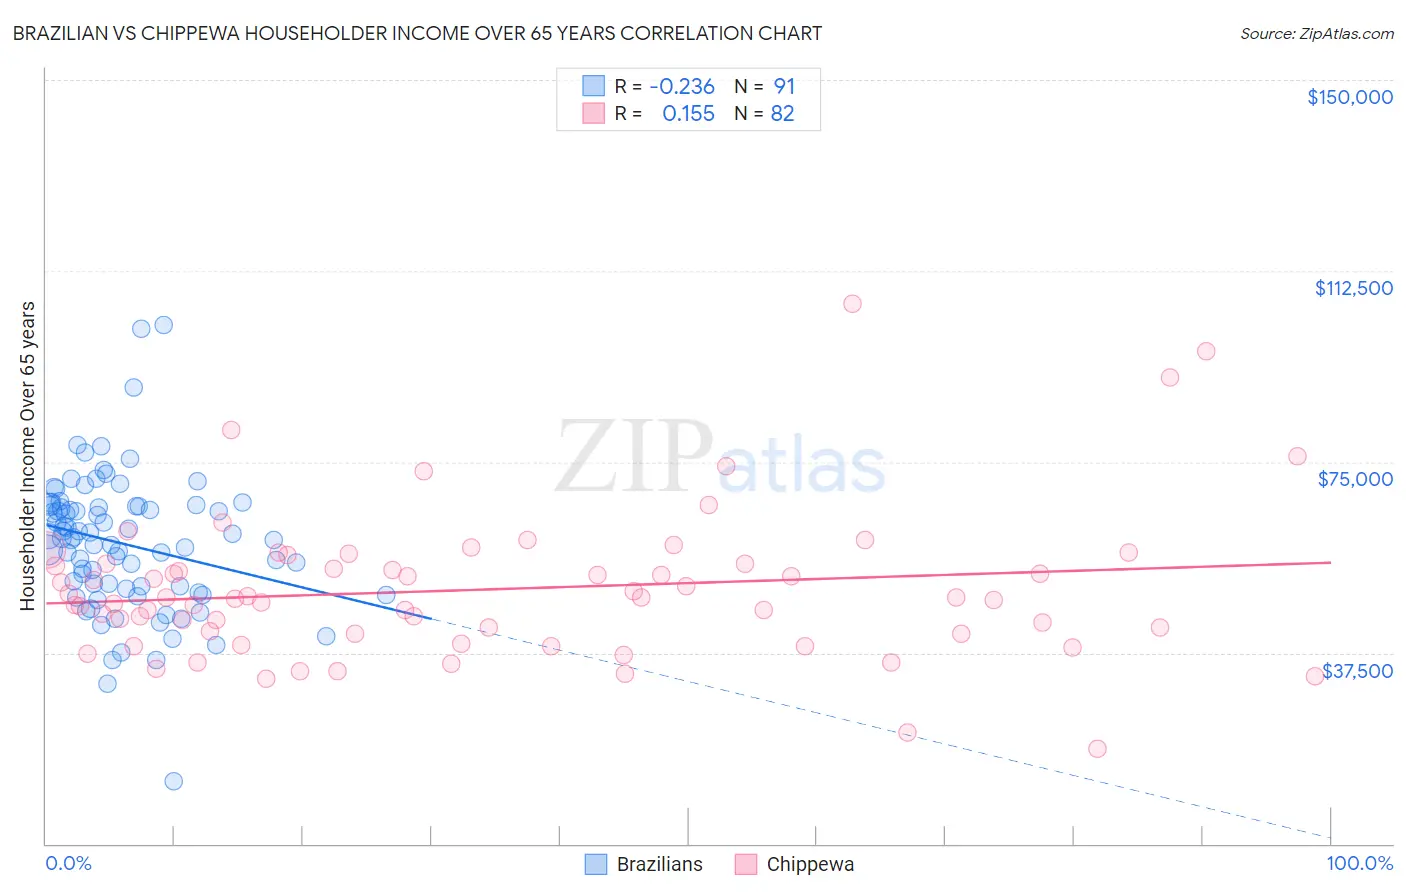 Brazilian vs Chippewa Householder Income Over 65 years